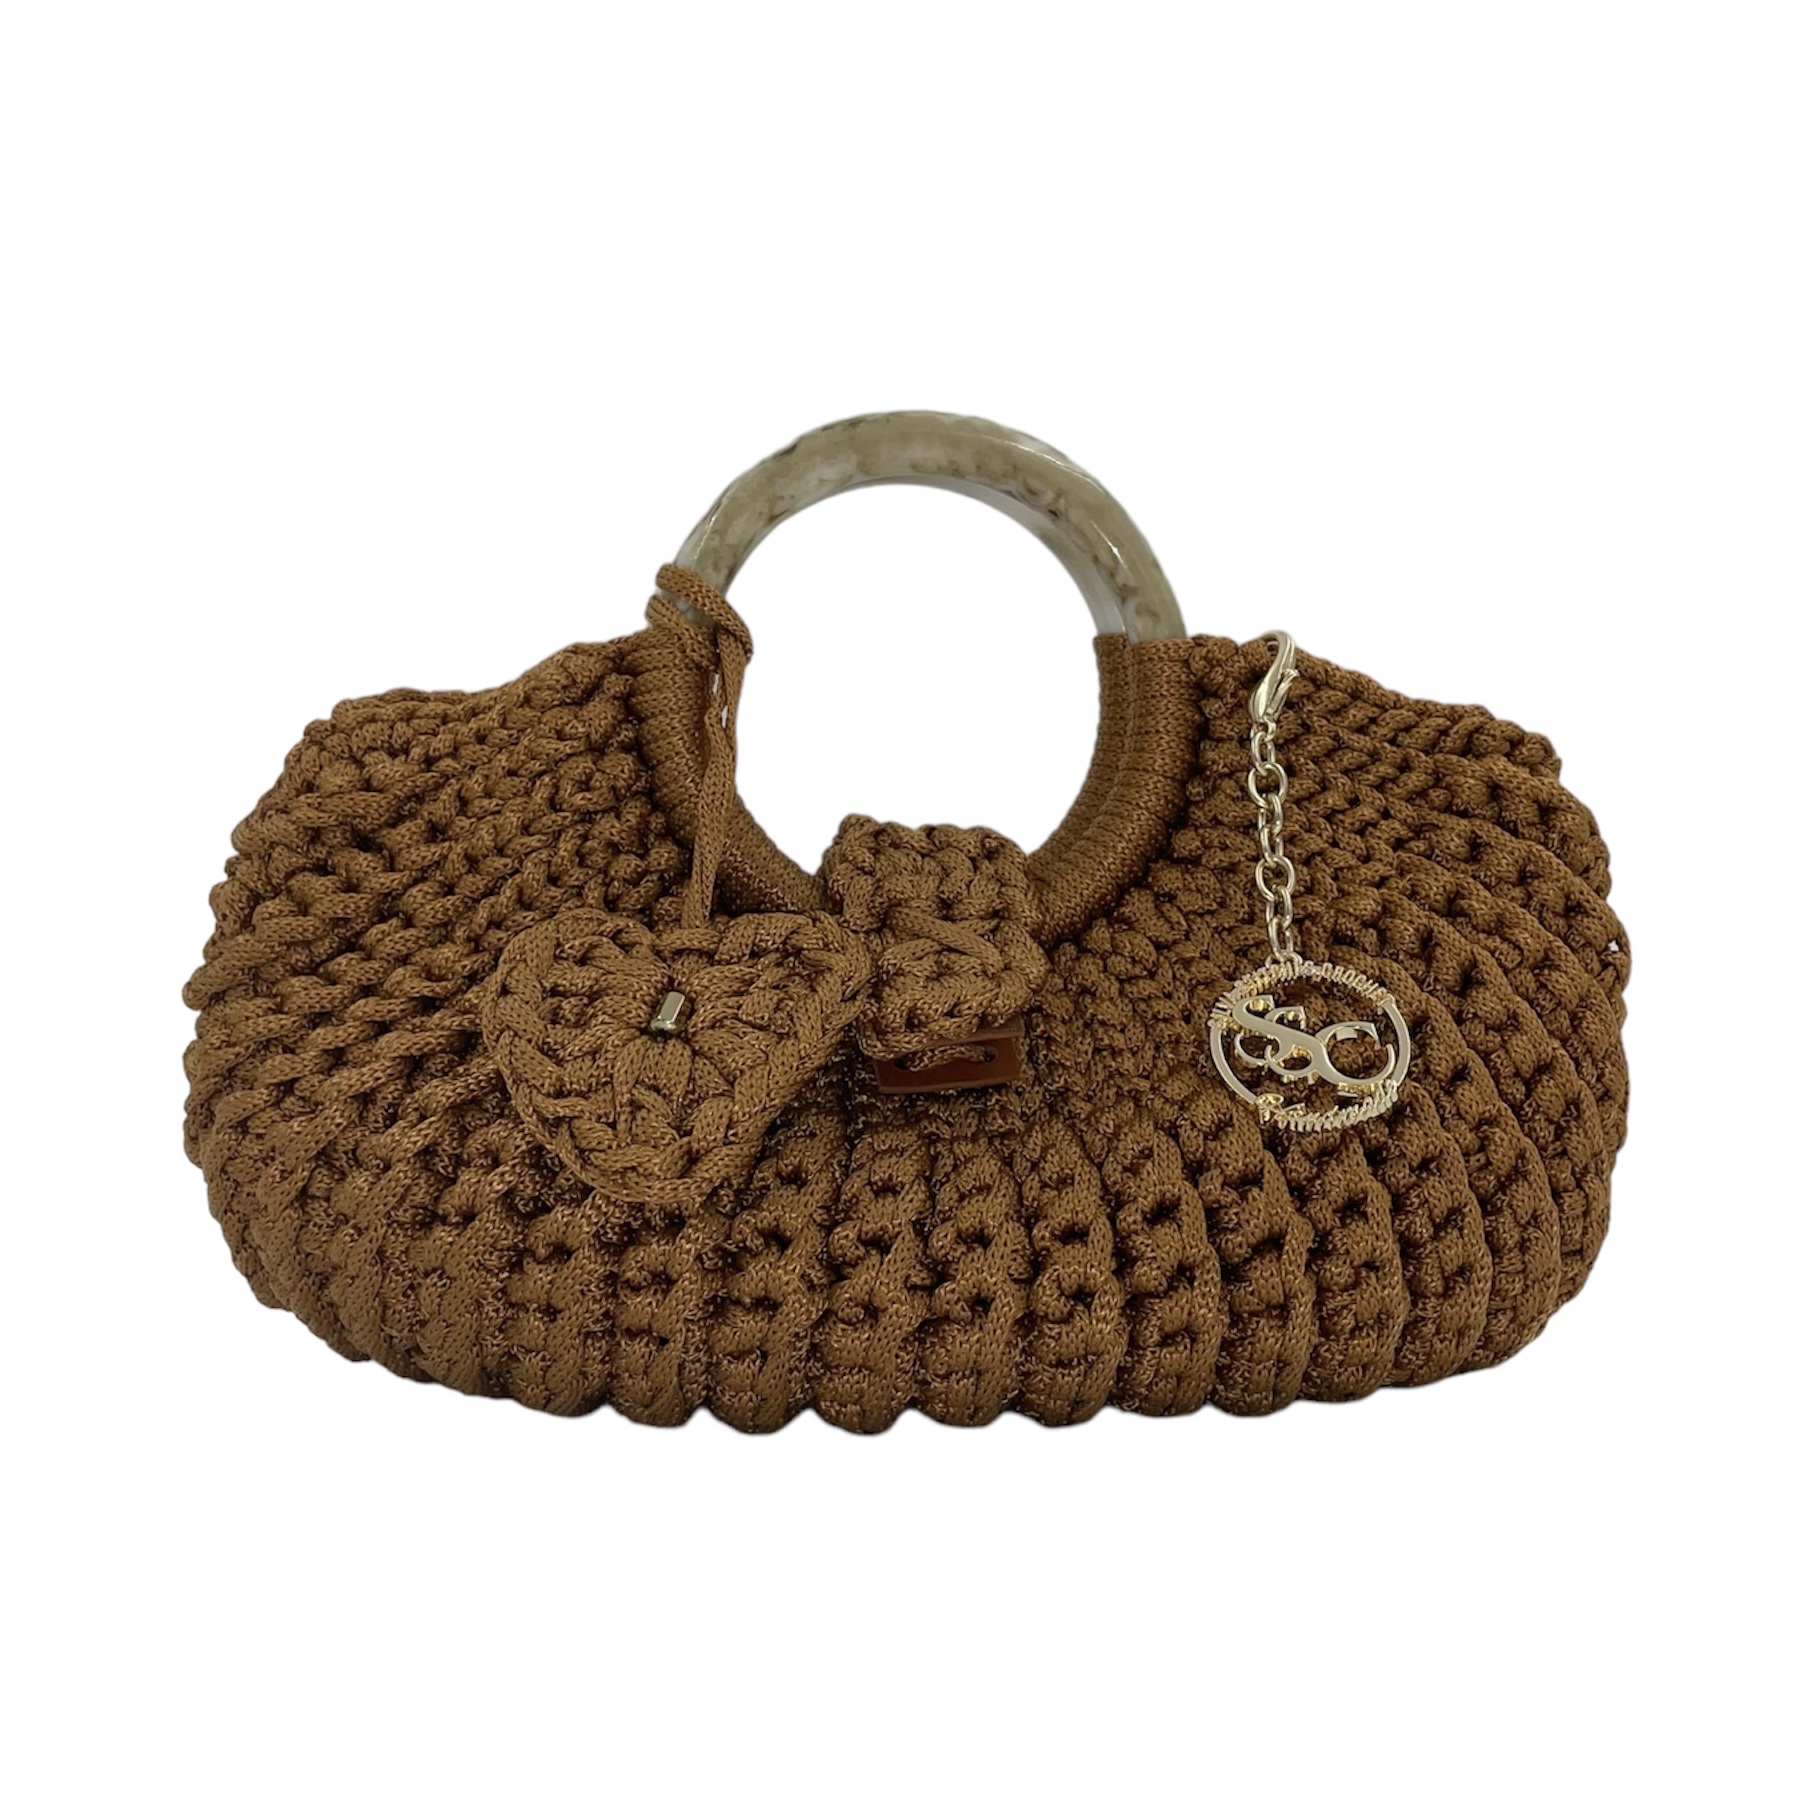 Silva Stitches Crochet Shell Bag with Acrylic Handle - SILVA STITCHES ...